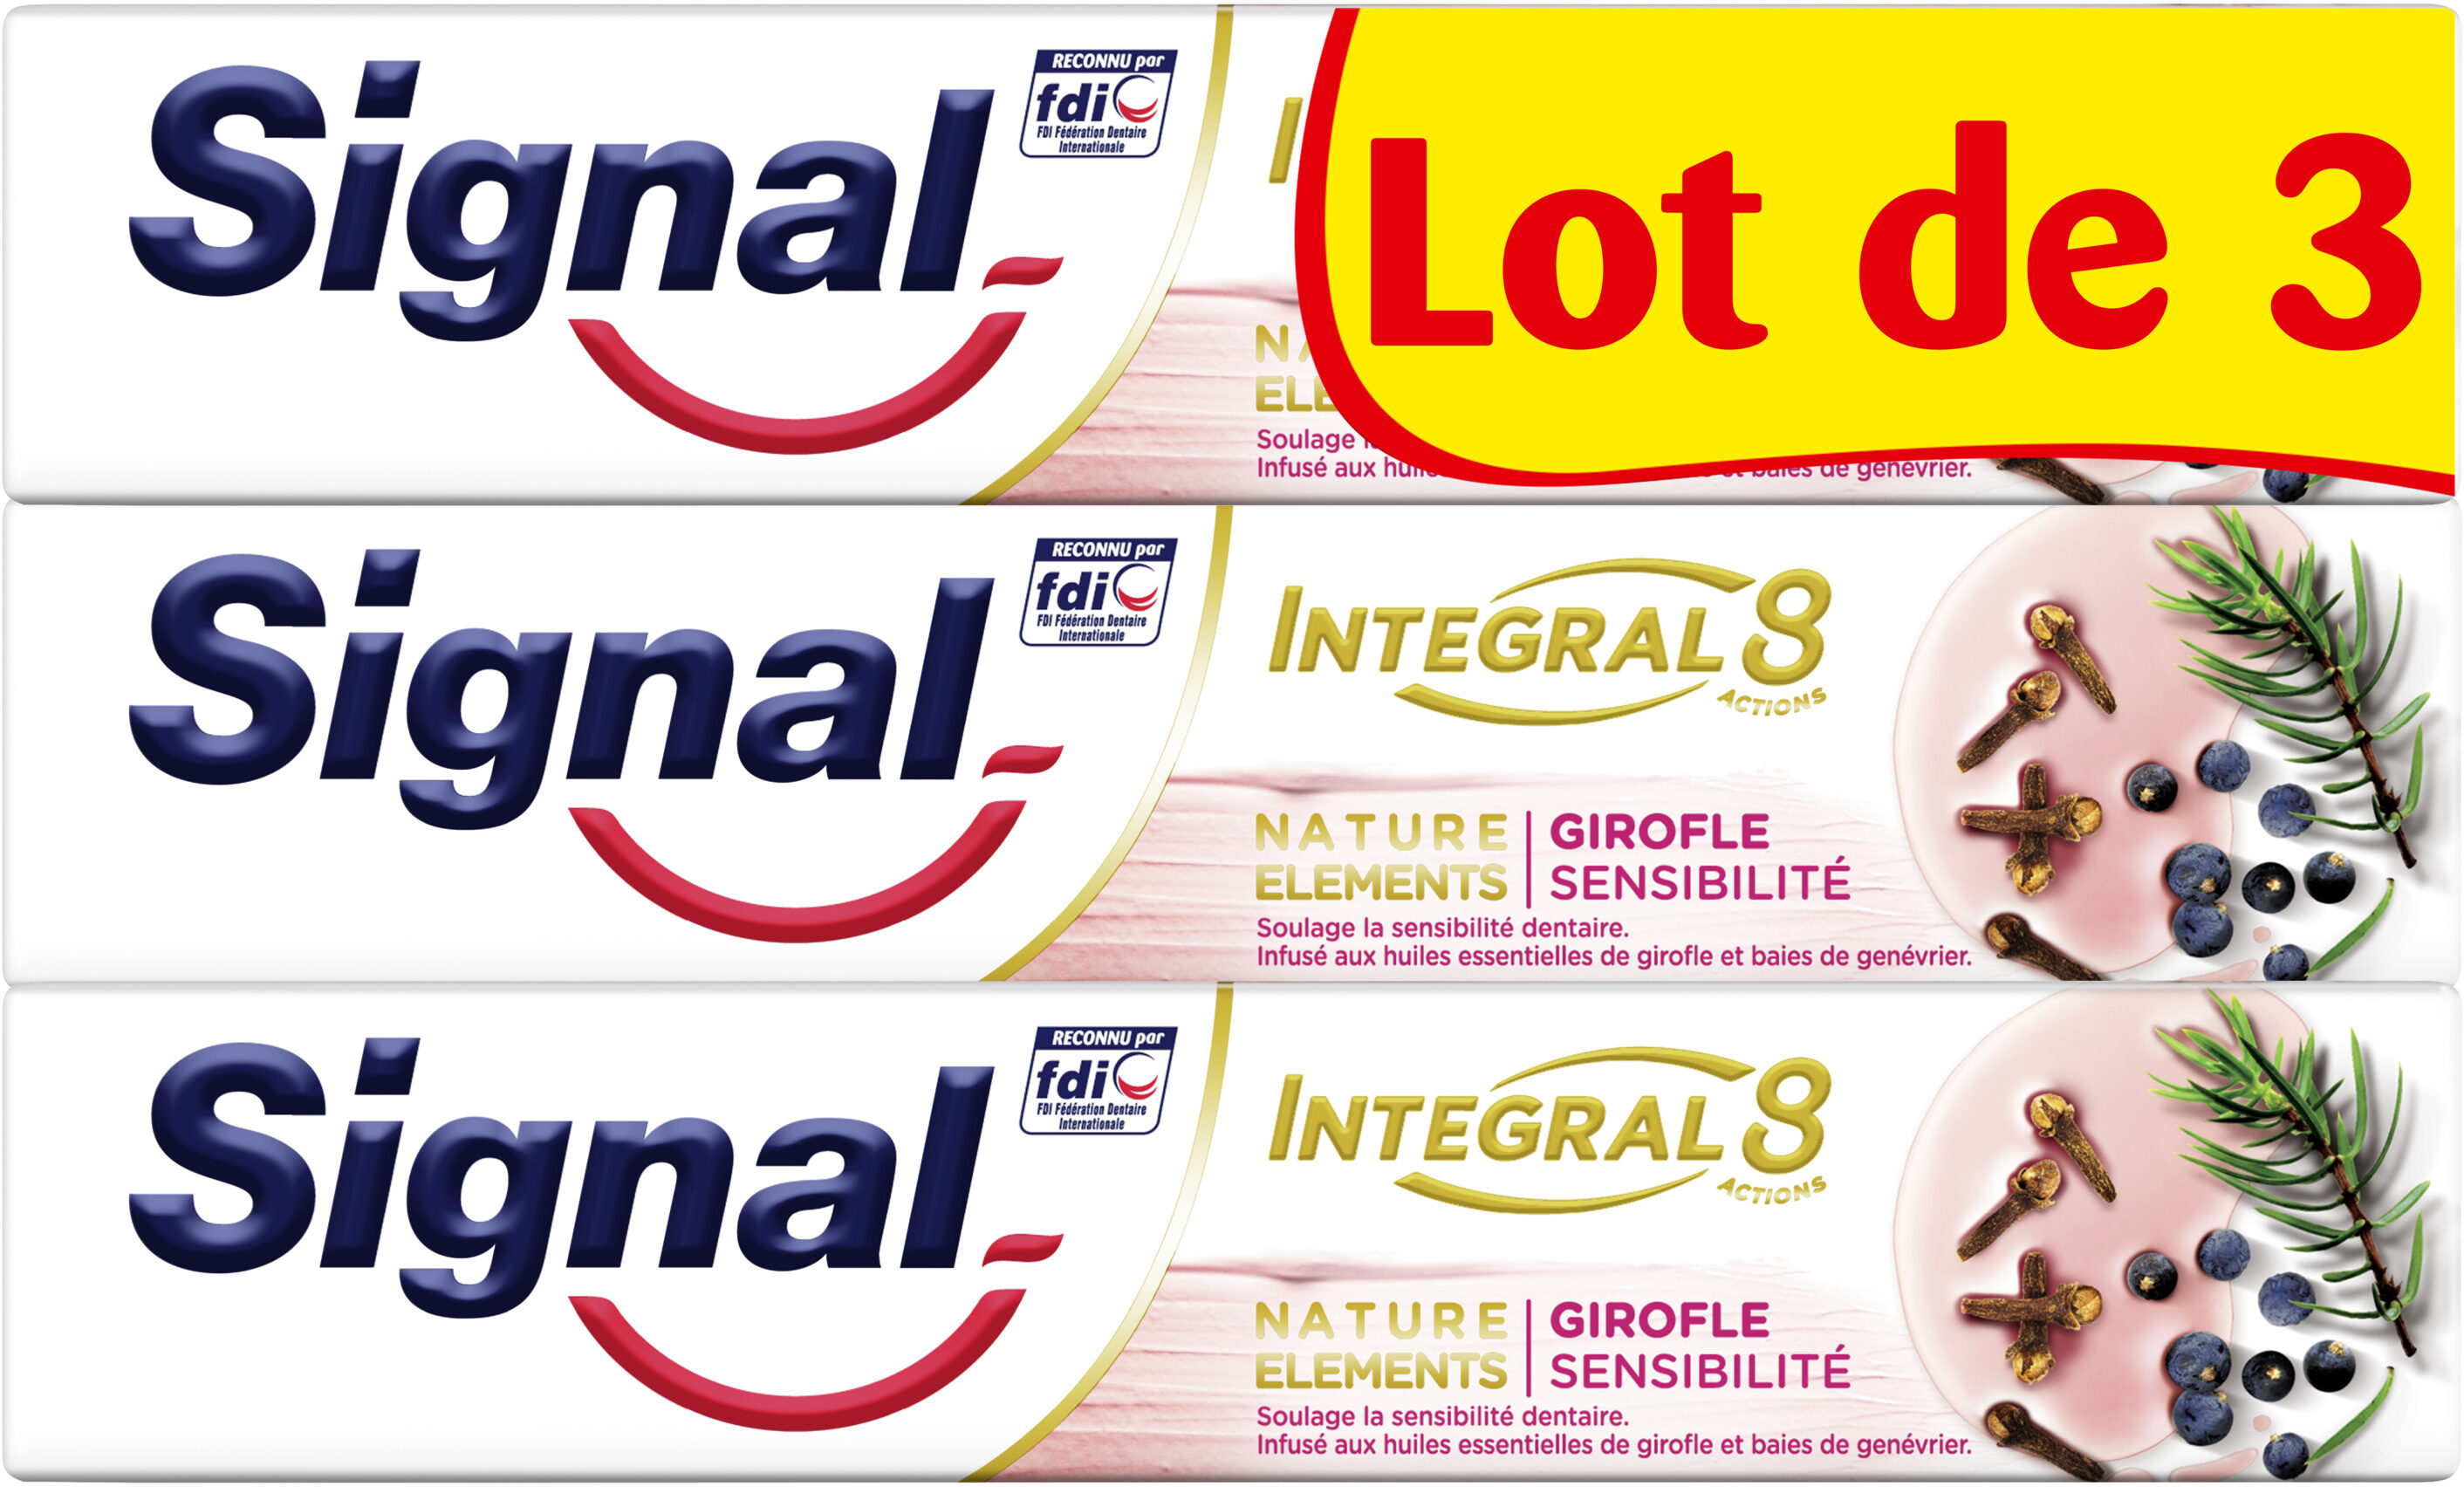 Signal Integral 8 Dentifrice Nature Elements Girofle Sensibilité 3x75ml - Product - fr